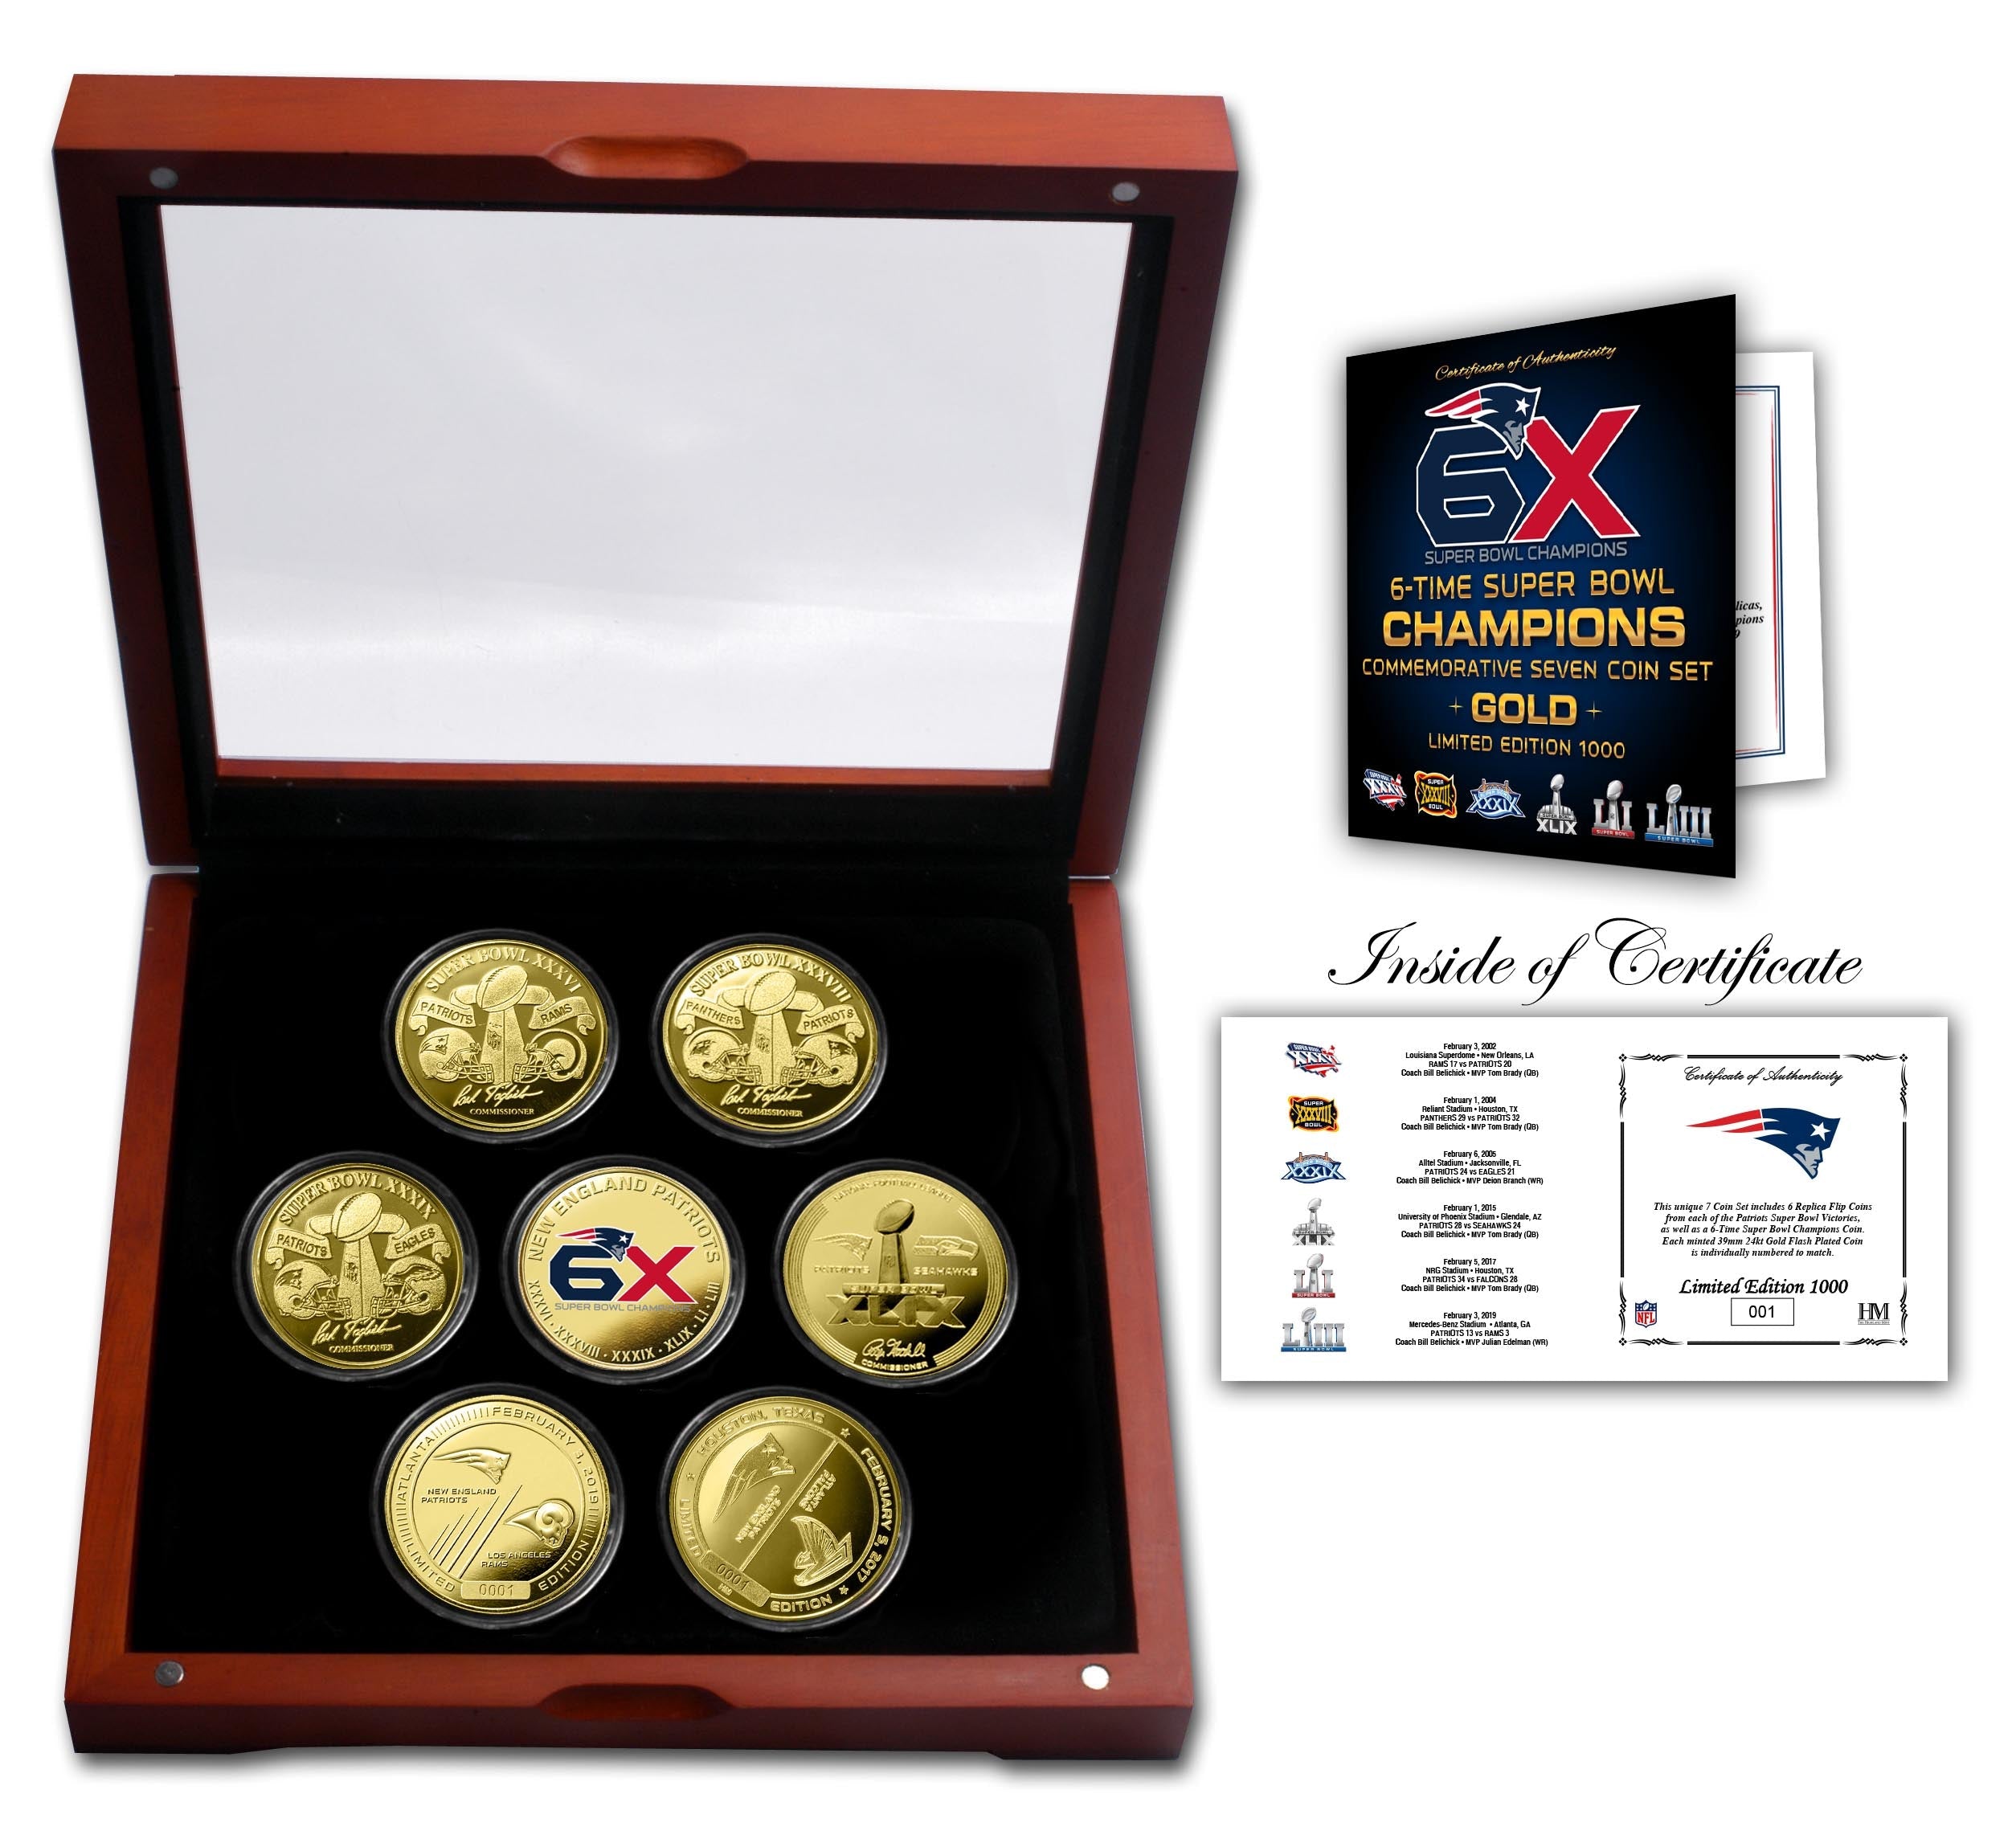 New England Patriots 6x Super Bowl Champions Gold 7-Coin Set